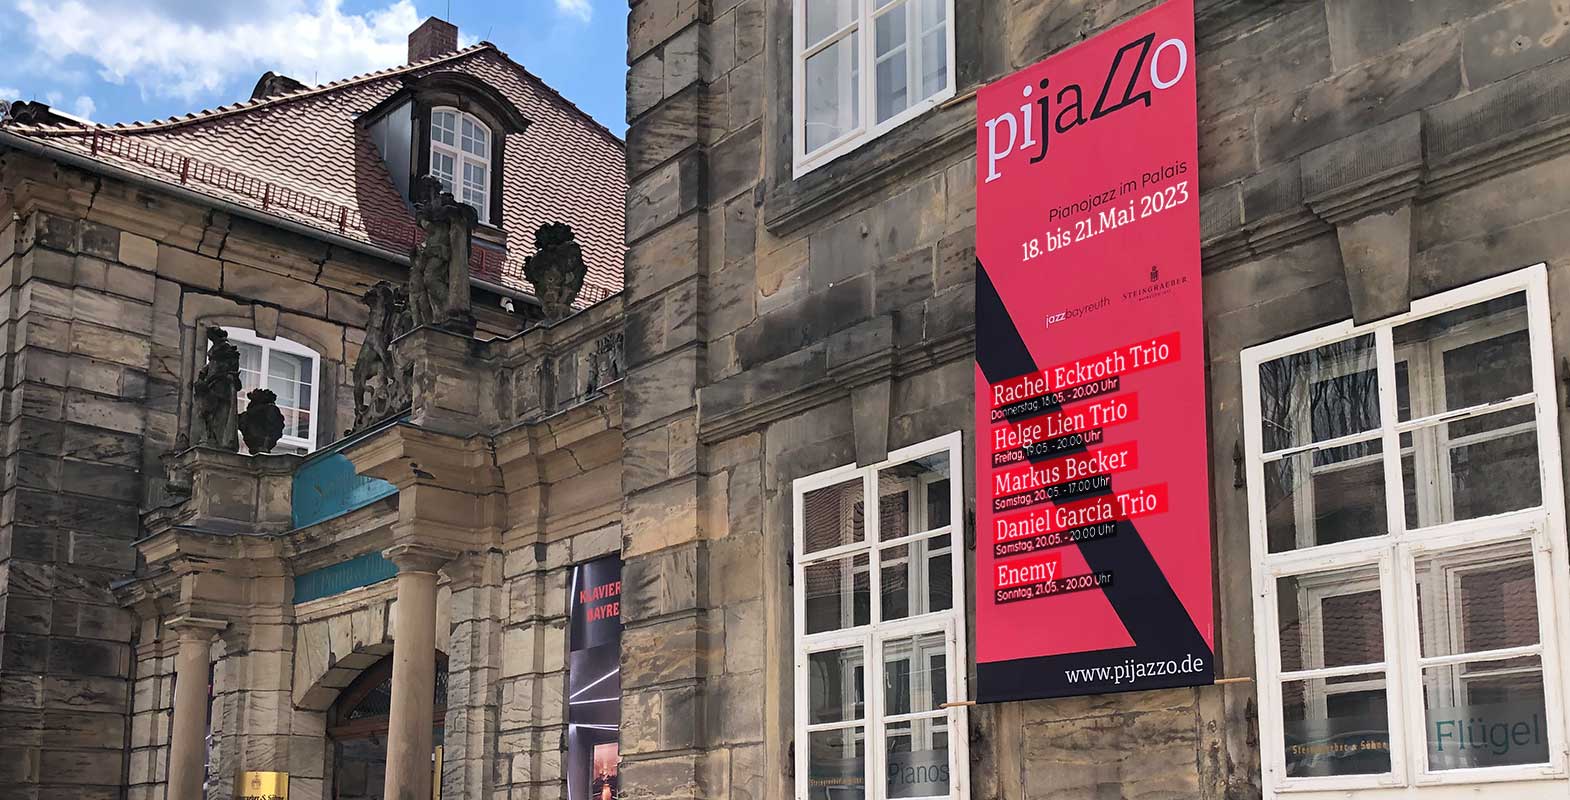 jazzfestival-pijazzo-banner-steingraeber